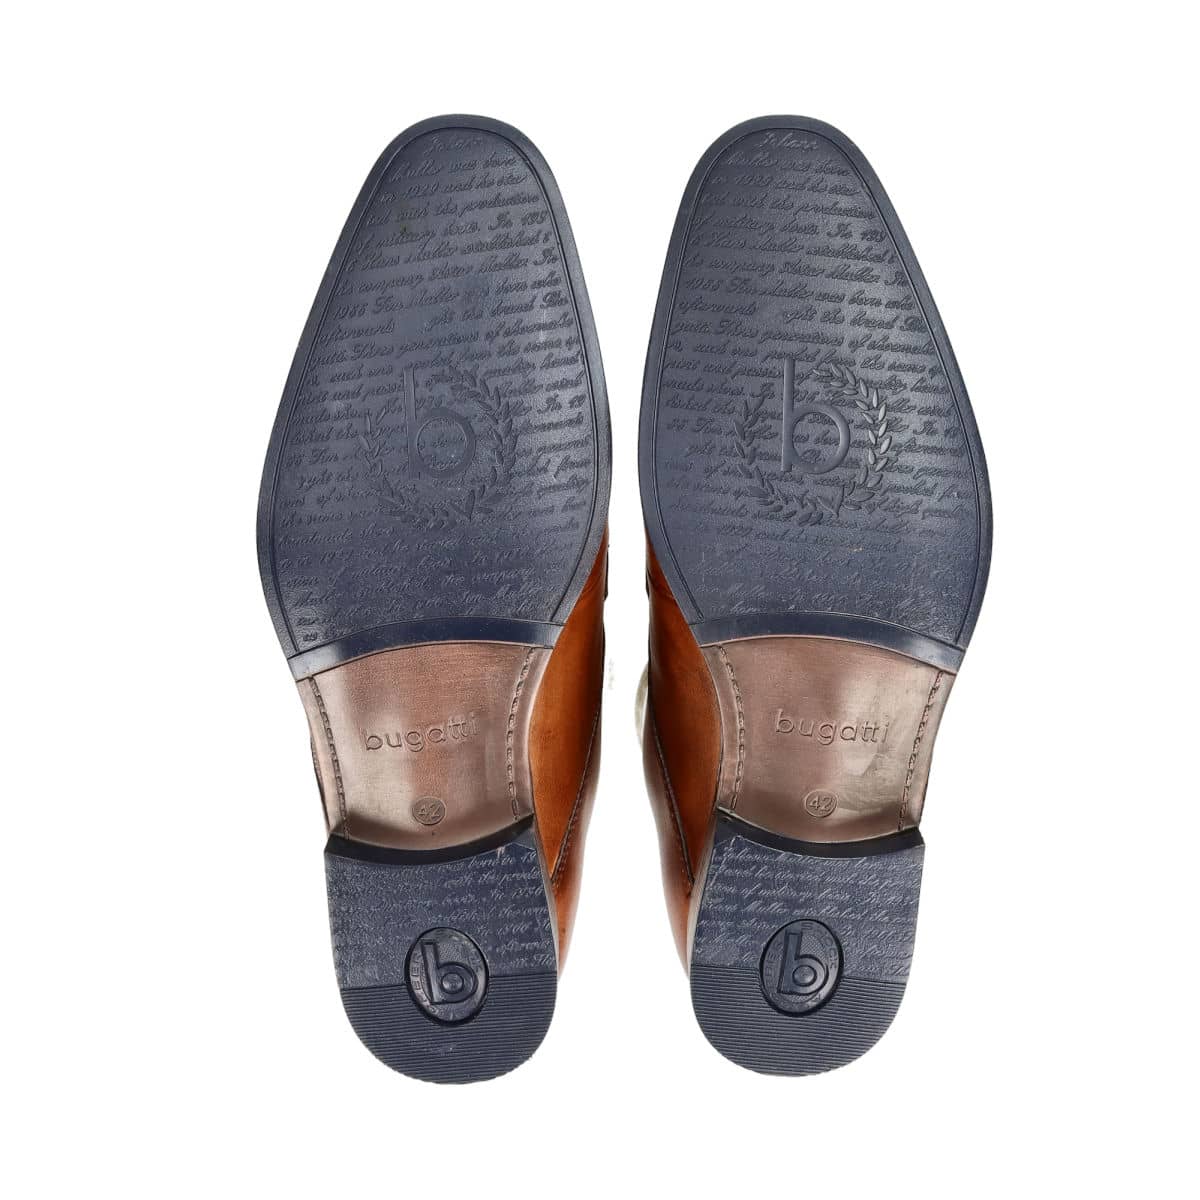 Bugatti men\'s leather formal shoes brown - cognac